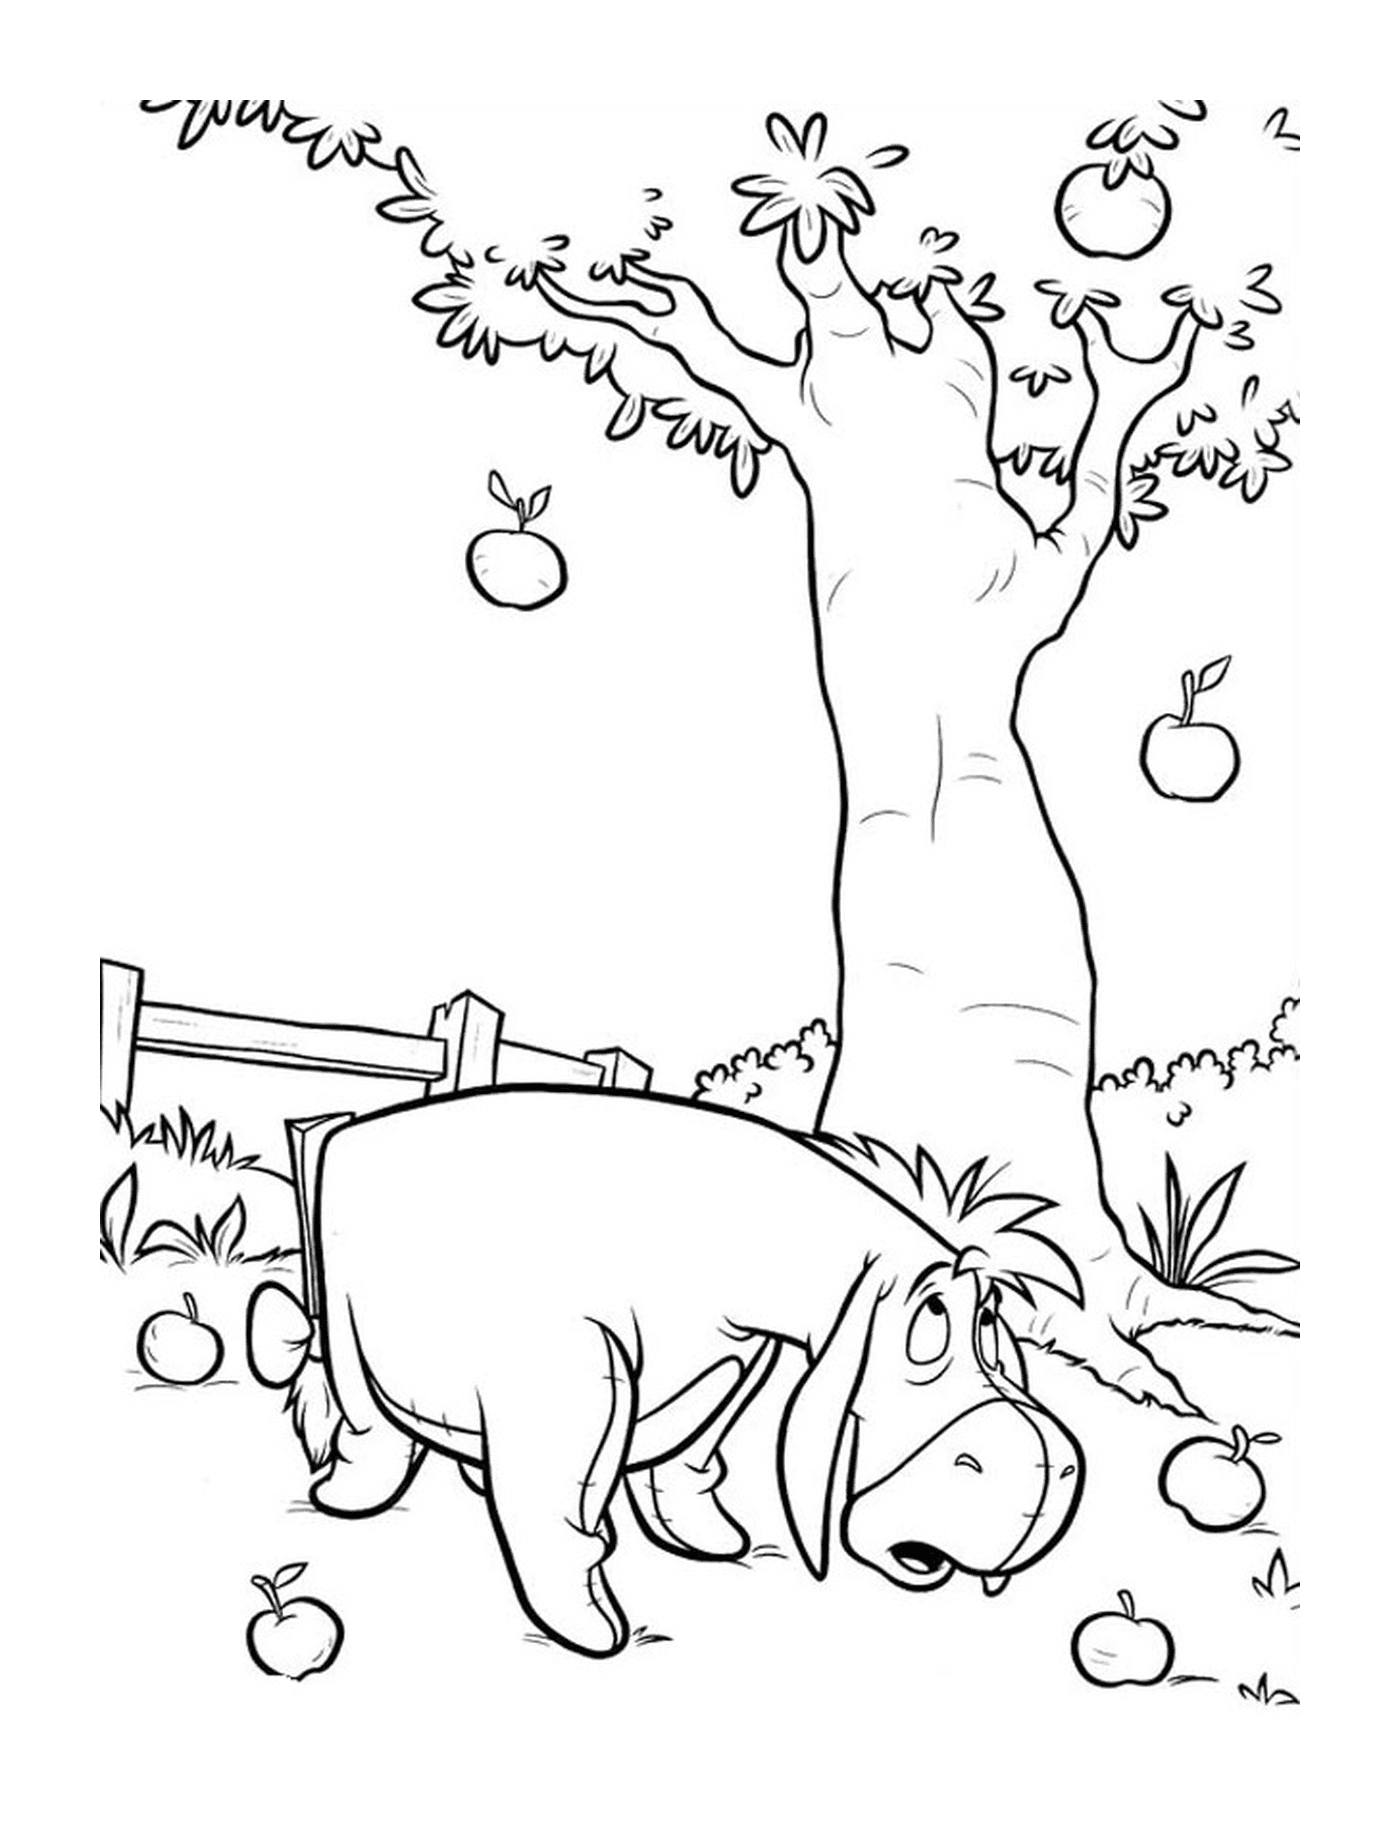  A hippopotamus standing next to an apple tree 